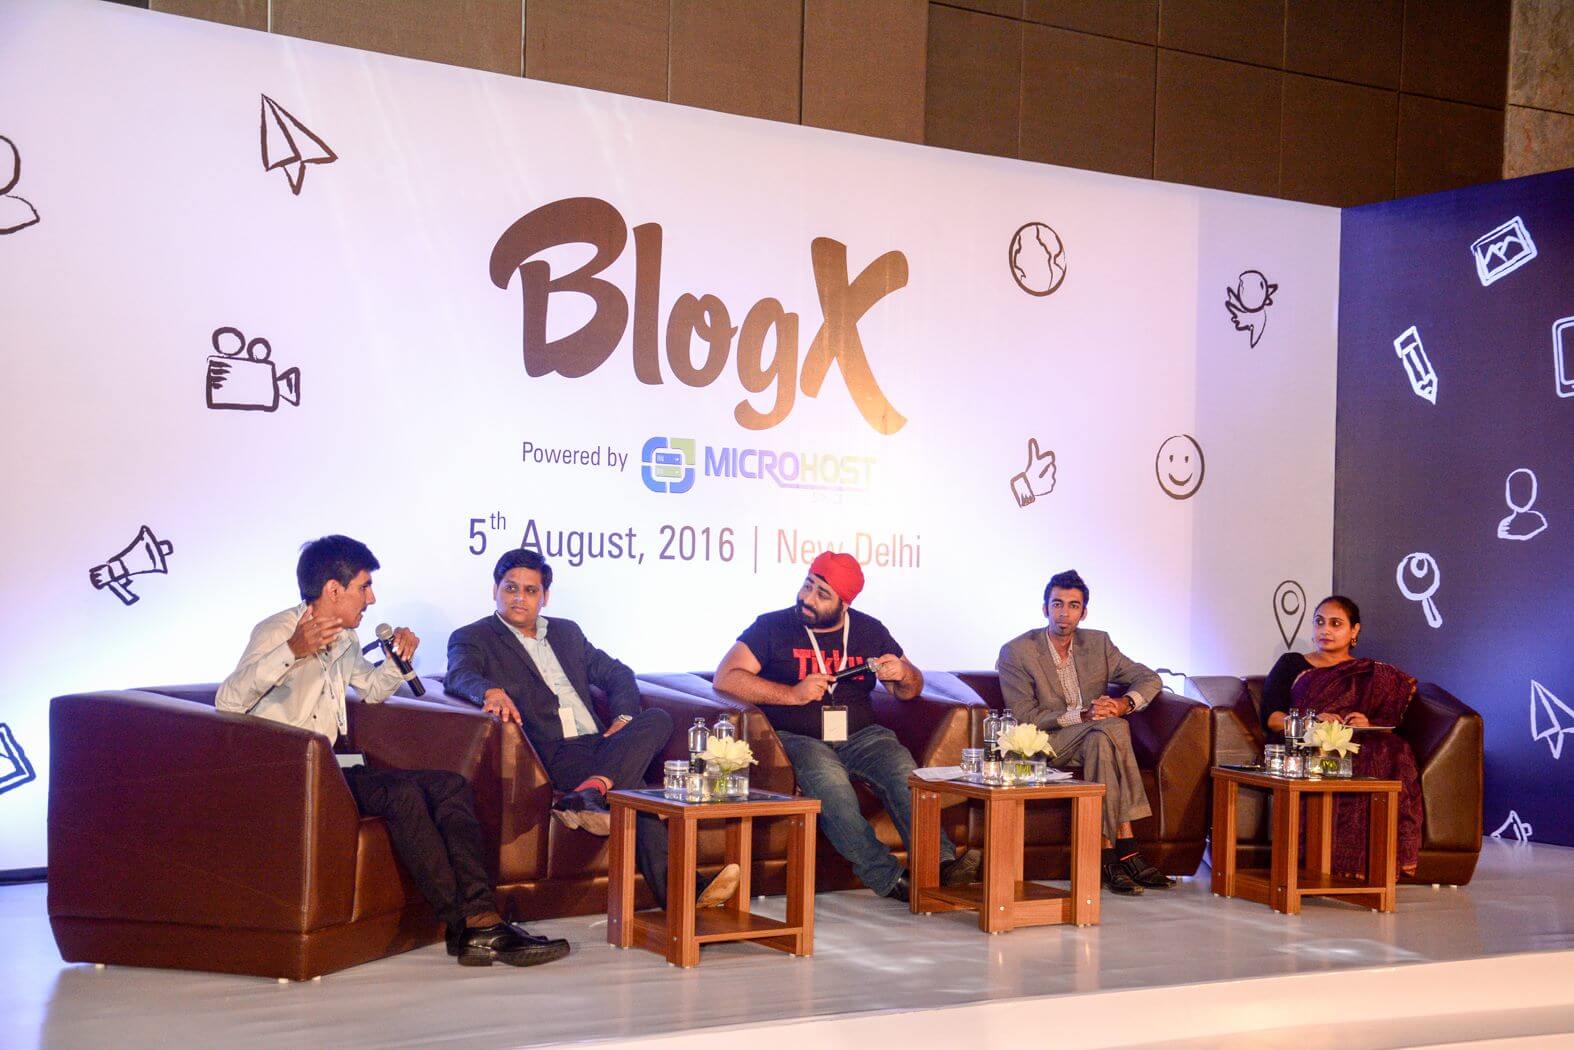 blogx panel discussion